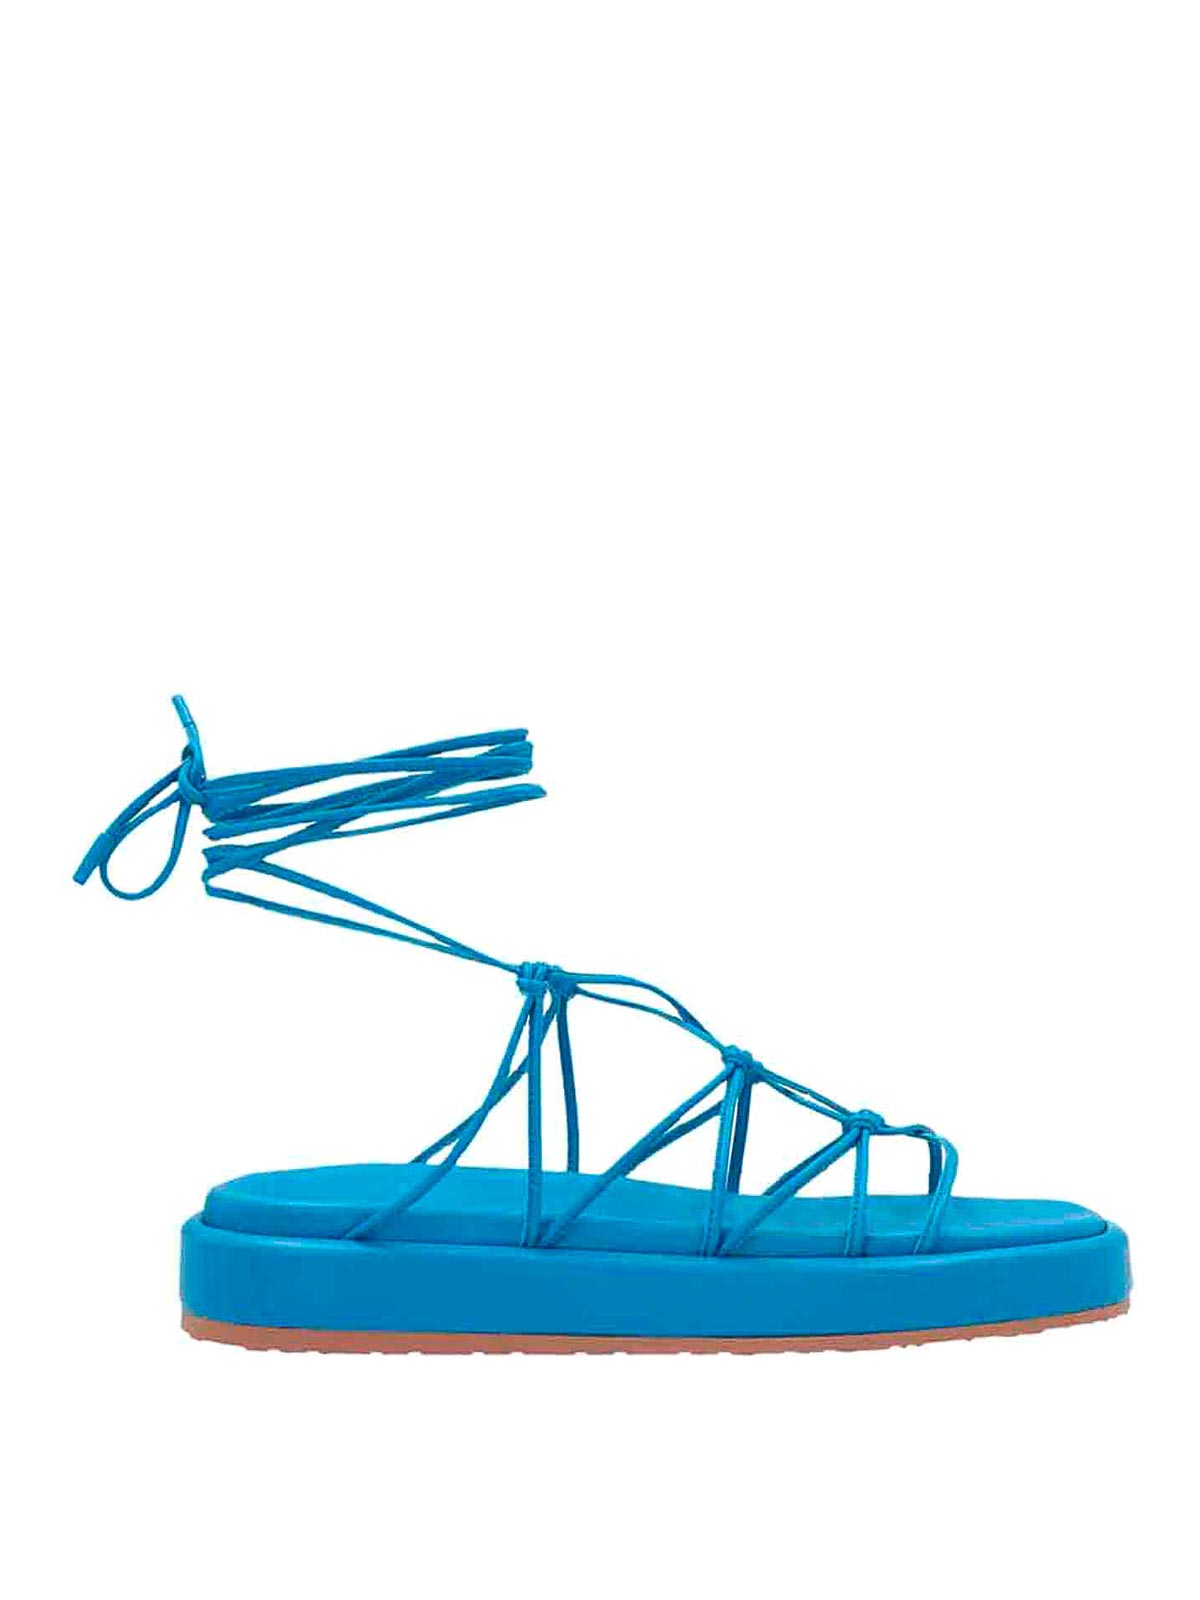 Amazon.com: Sandals for Women Fashion Peep Toe Wedge Slipper Flatform  Sandals Causal Lace Up Sandal Shoes Slipper Flip Flops Brown : Toys & Games